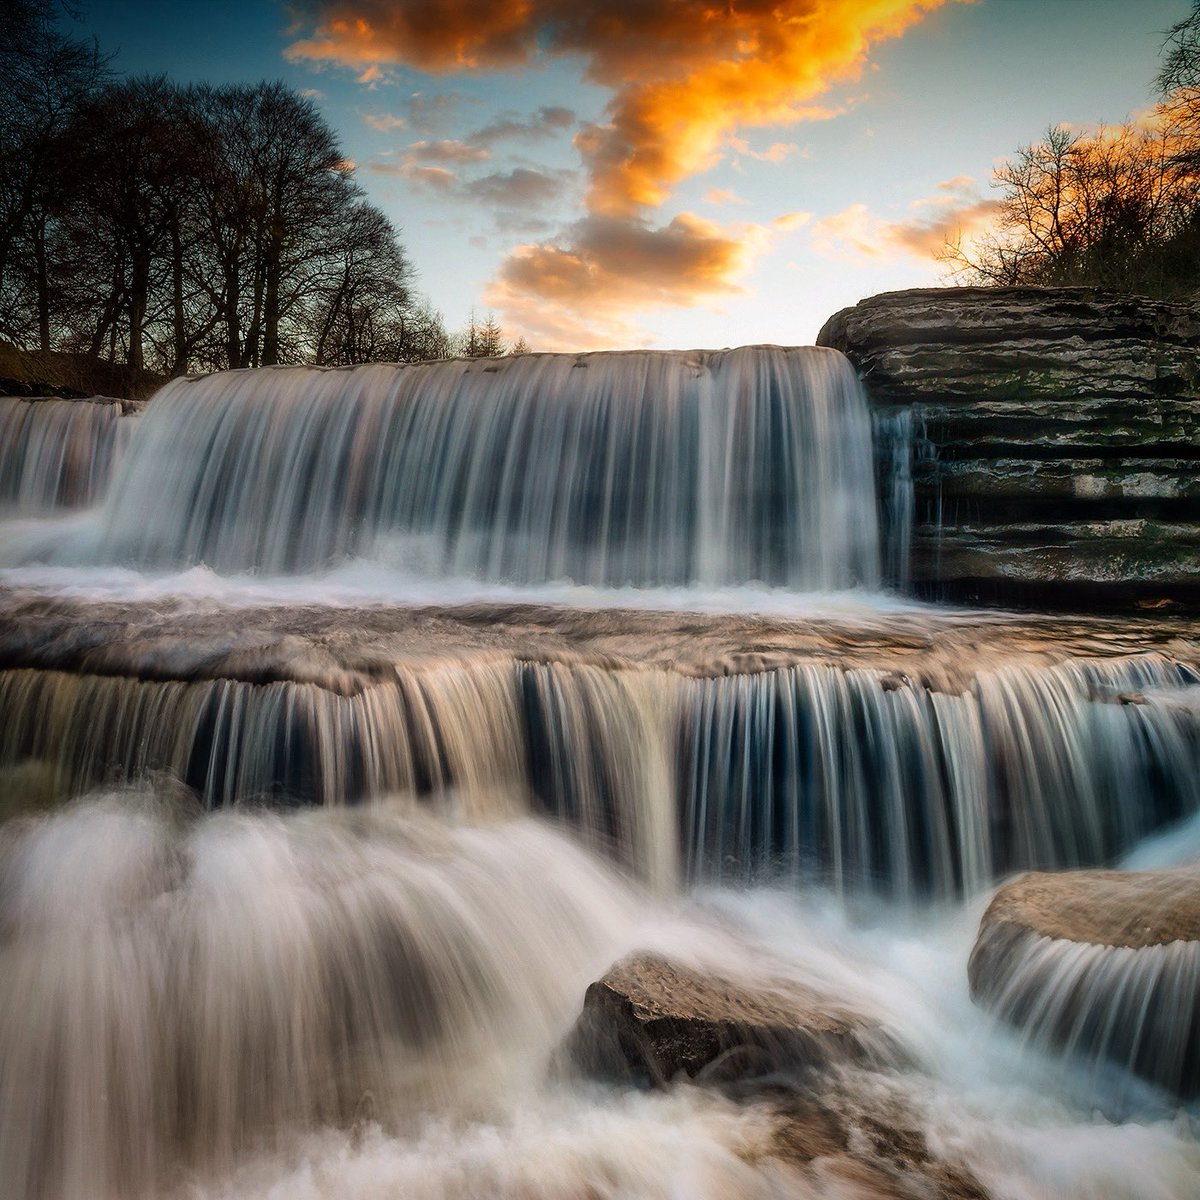 @Costa_Hikes Aysgarth lower falls in North Yorkshire, England #aysgarthfalls #photographer #waterfalls